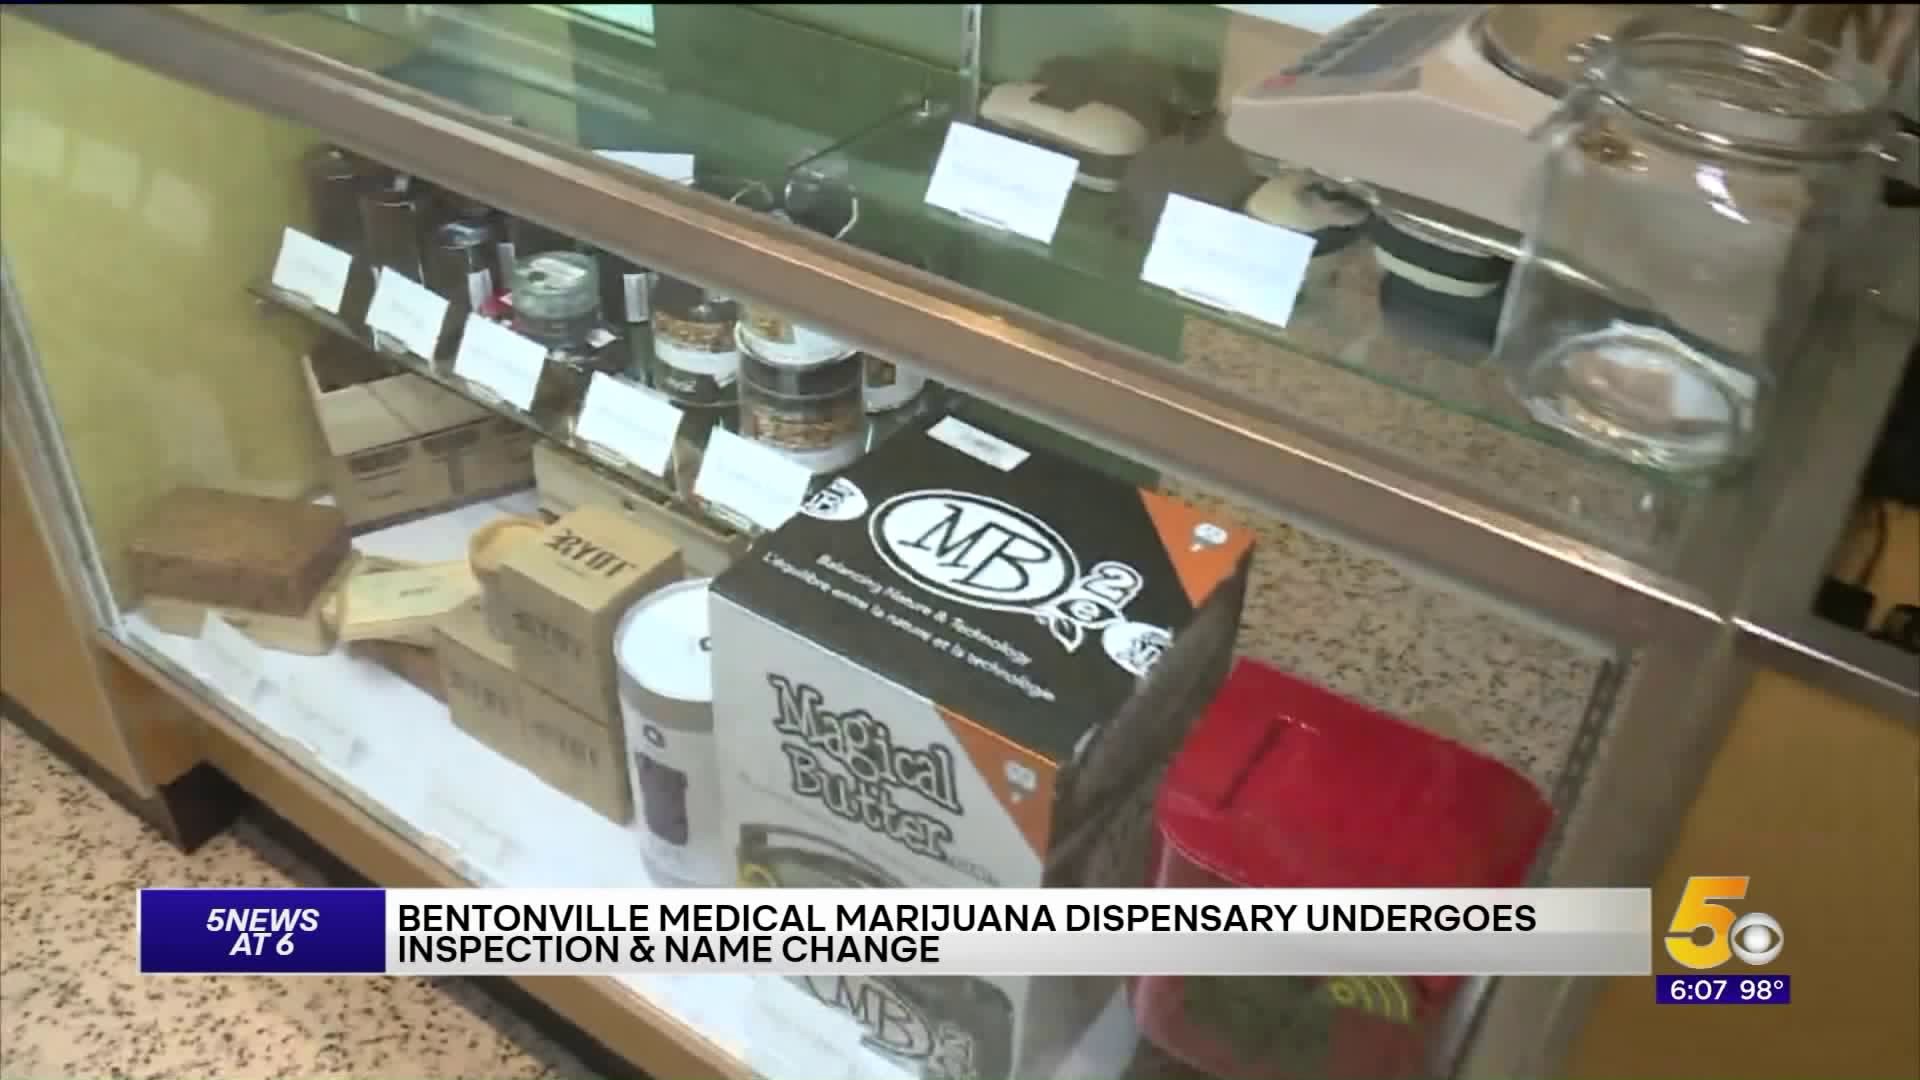 Bentonville Medical Marijuana Dispensary Undergoes Name Change and Inspection